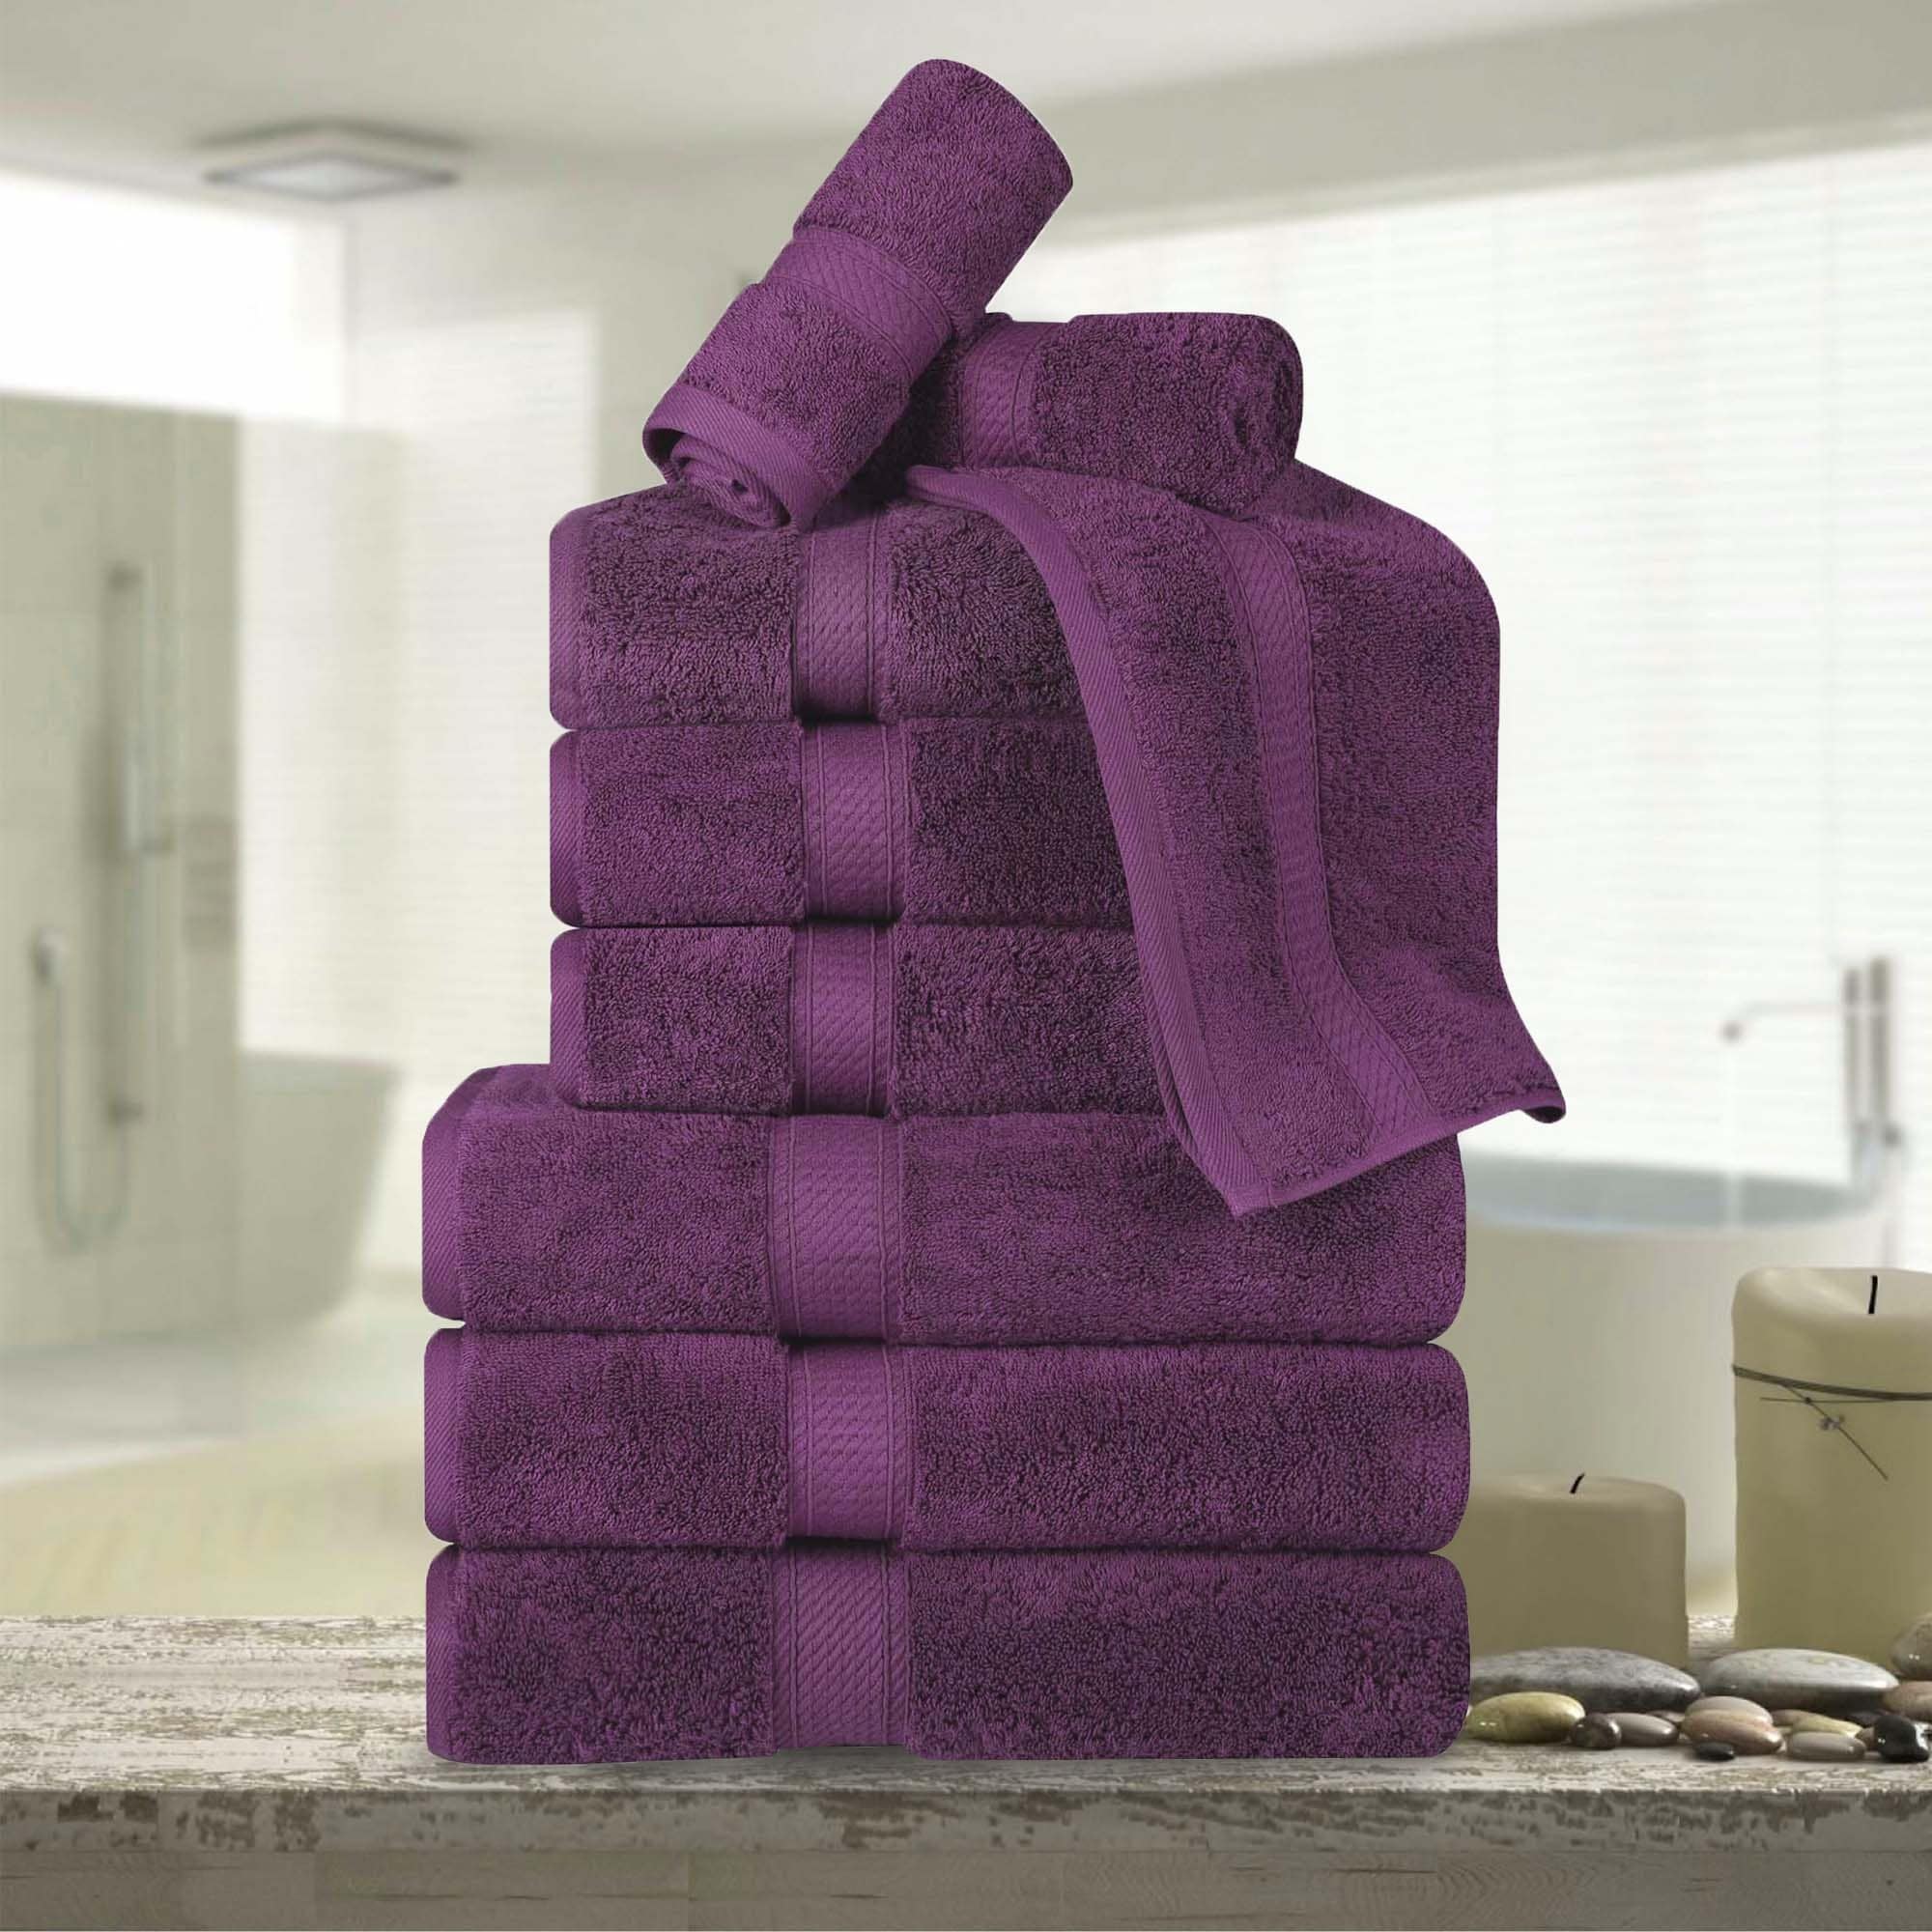 Madison Towel Set by Cannon – ShopEZ USA